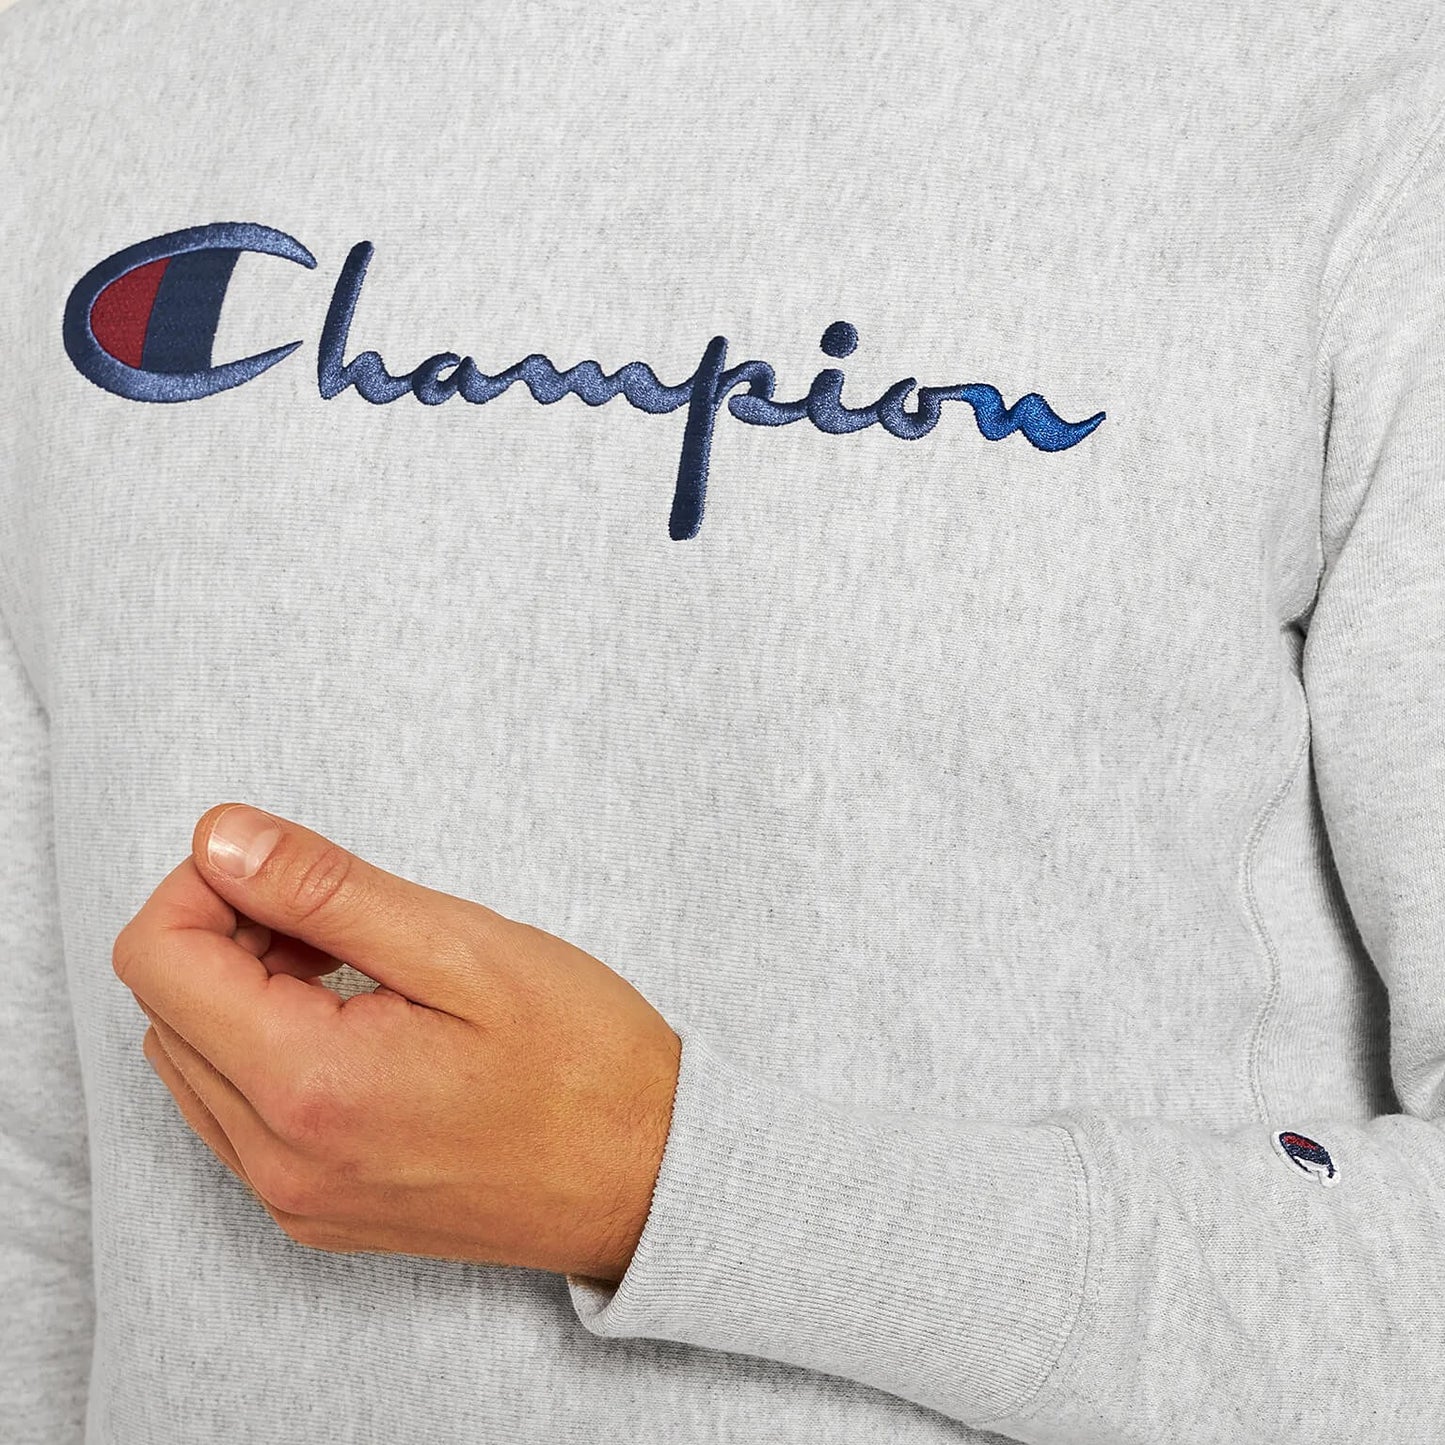 Champion Premium Rwss 1952 Crewneck Sweatshirt Grey